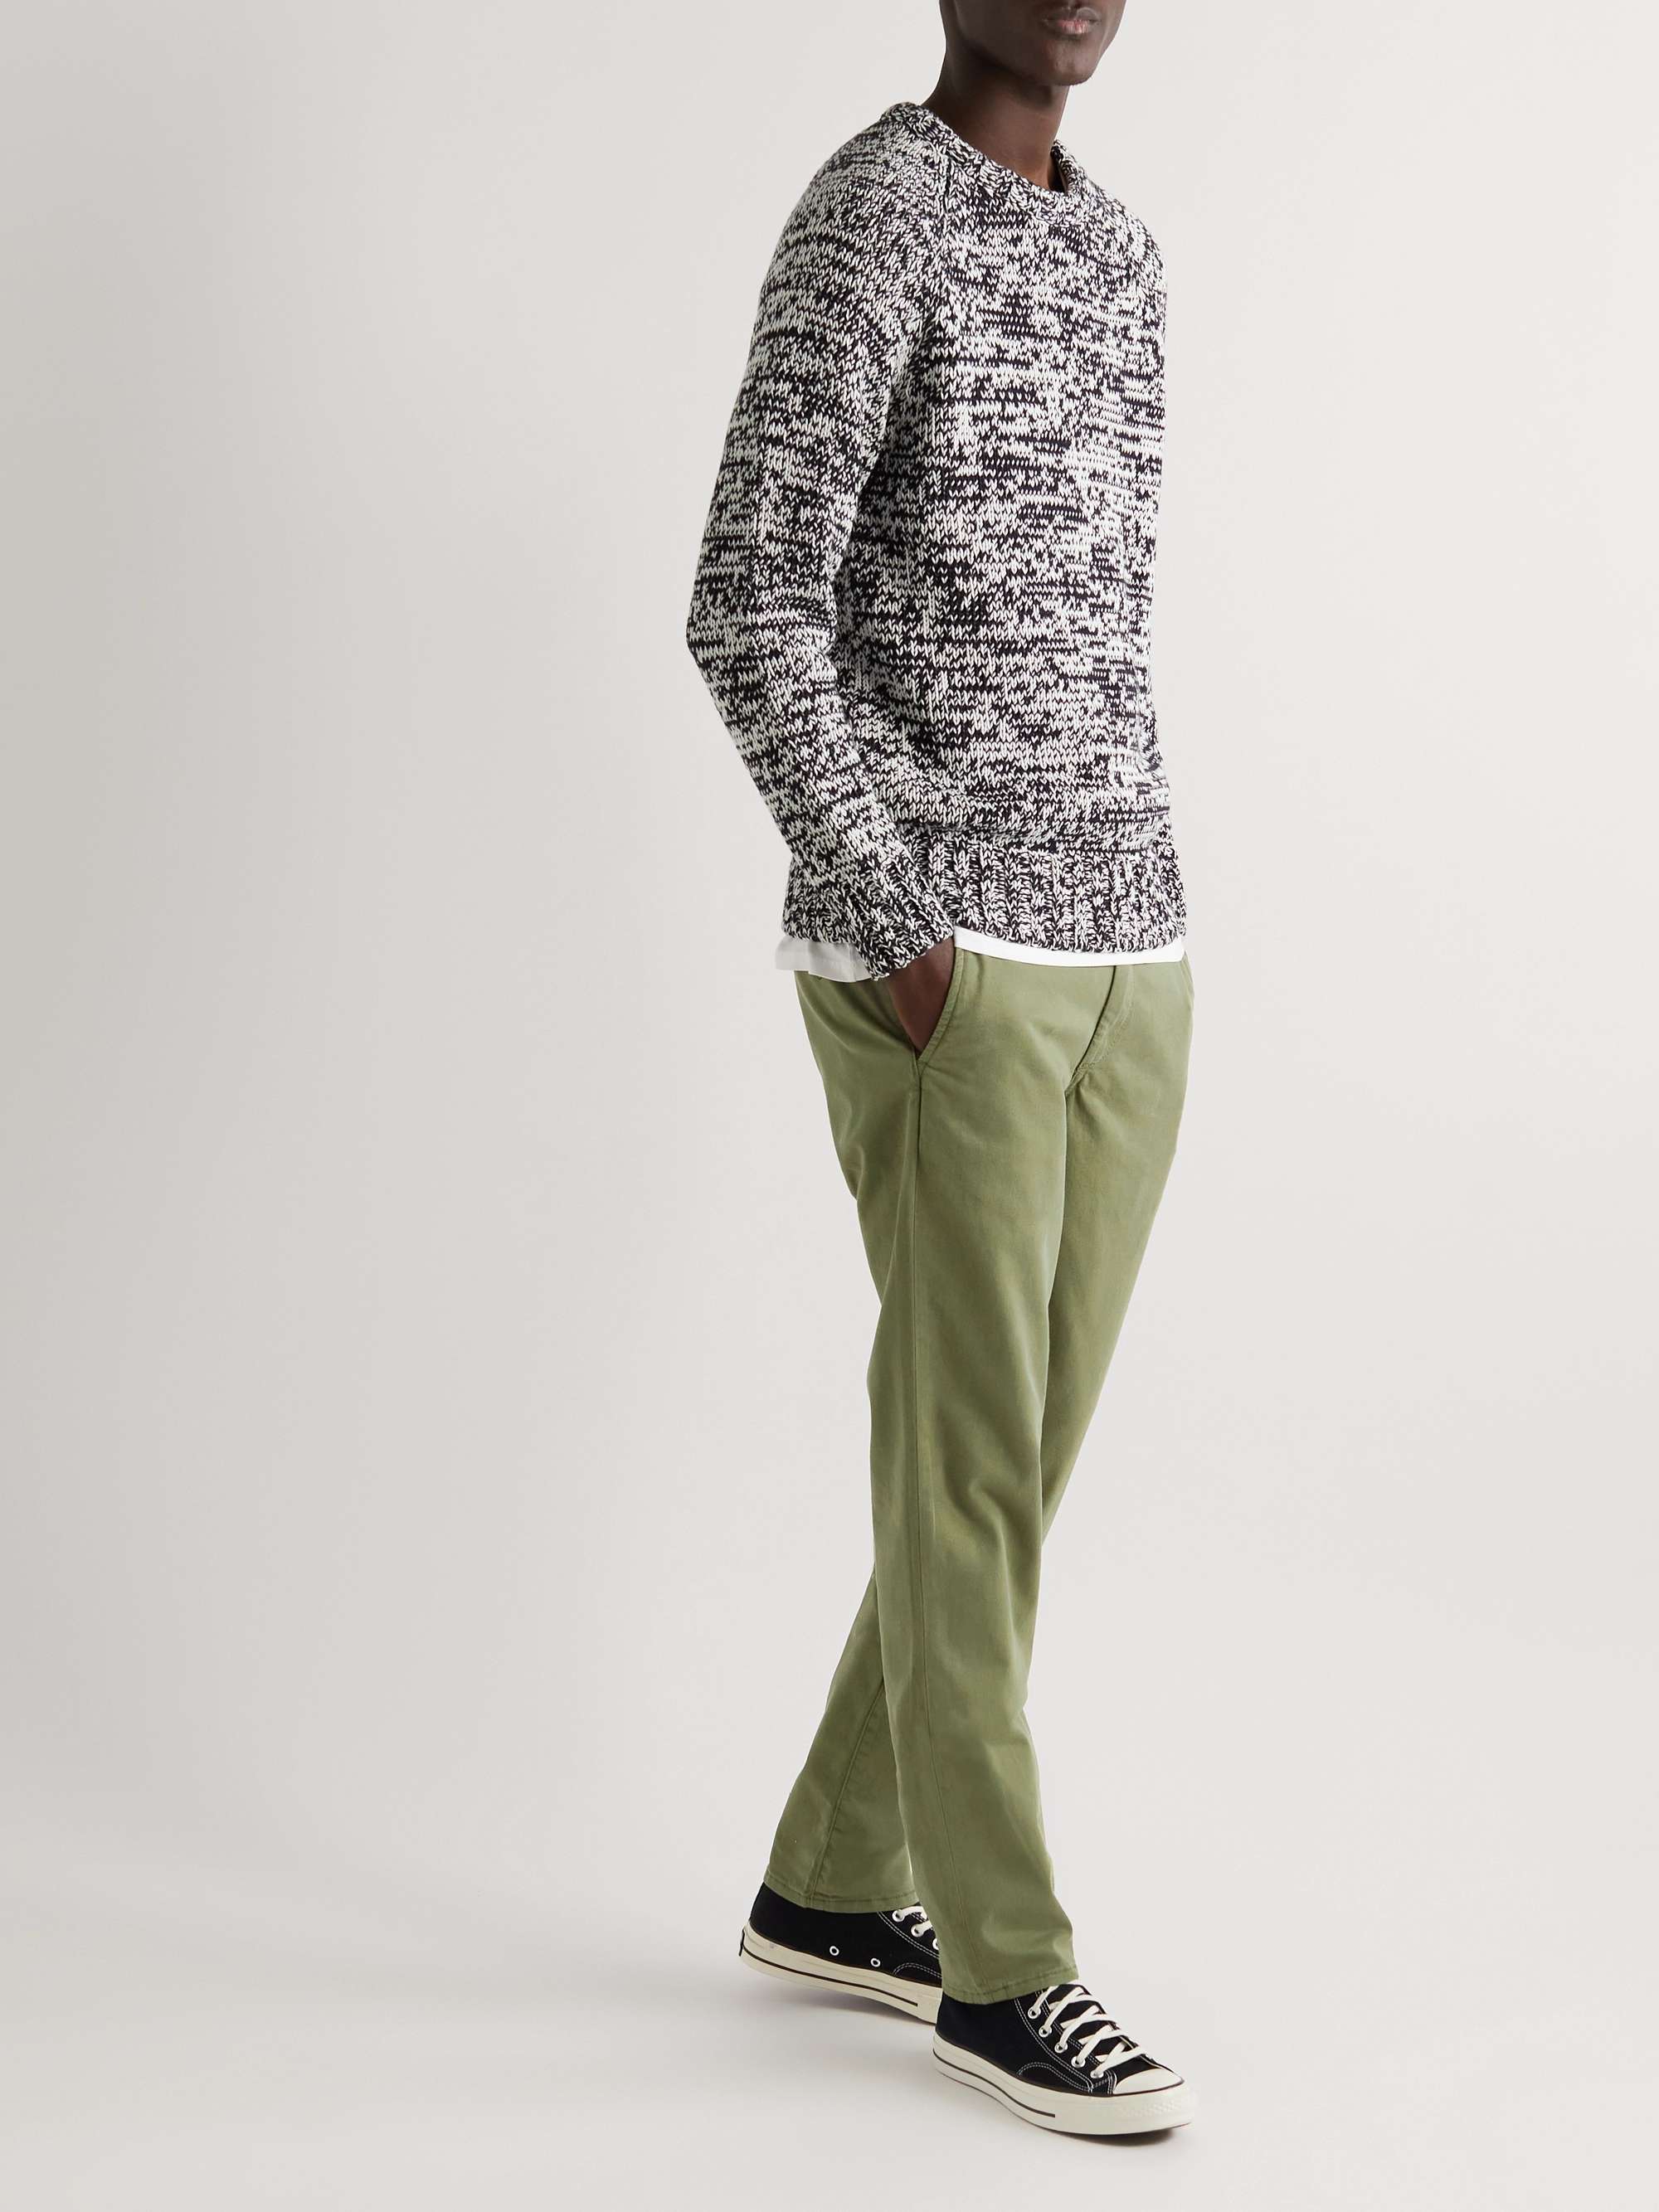 RAG & BONE Fit 2 Slim-Fit Garment-Dyed Stretch-Cotton Twill Chinos for Men  | MR PORTER